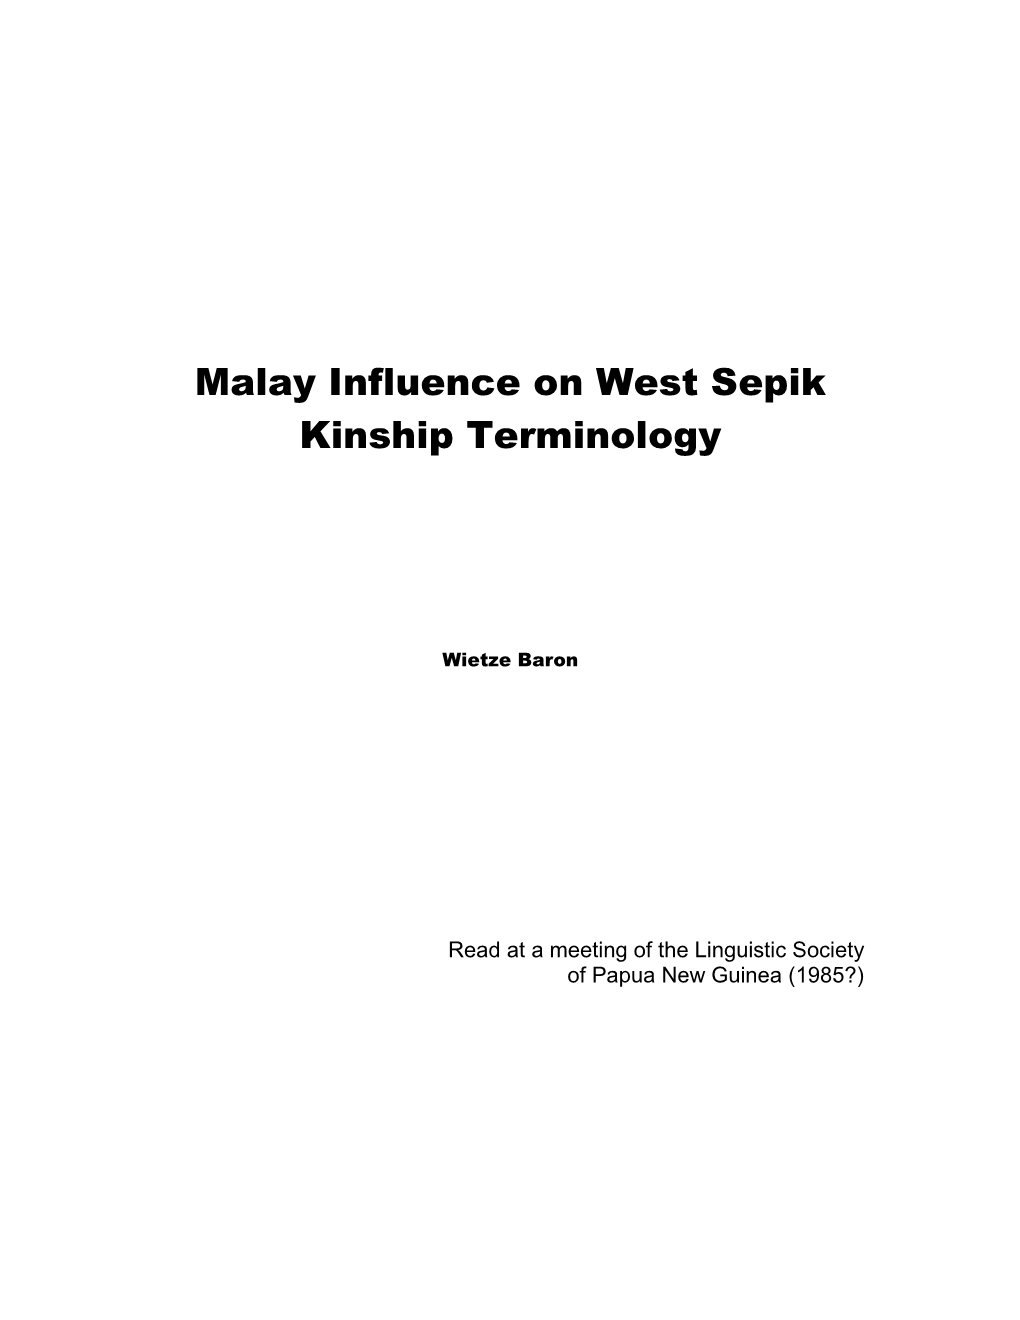 Malay Influence on West Sepik Kinship Terminology